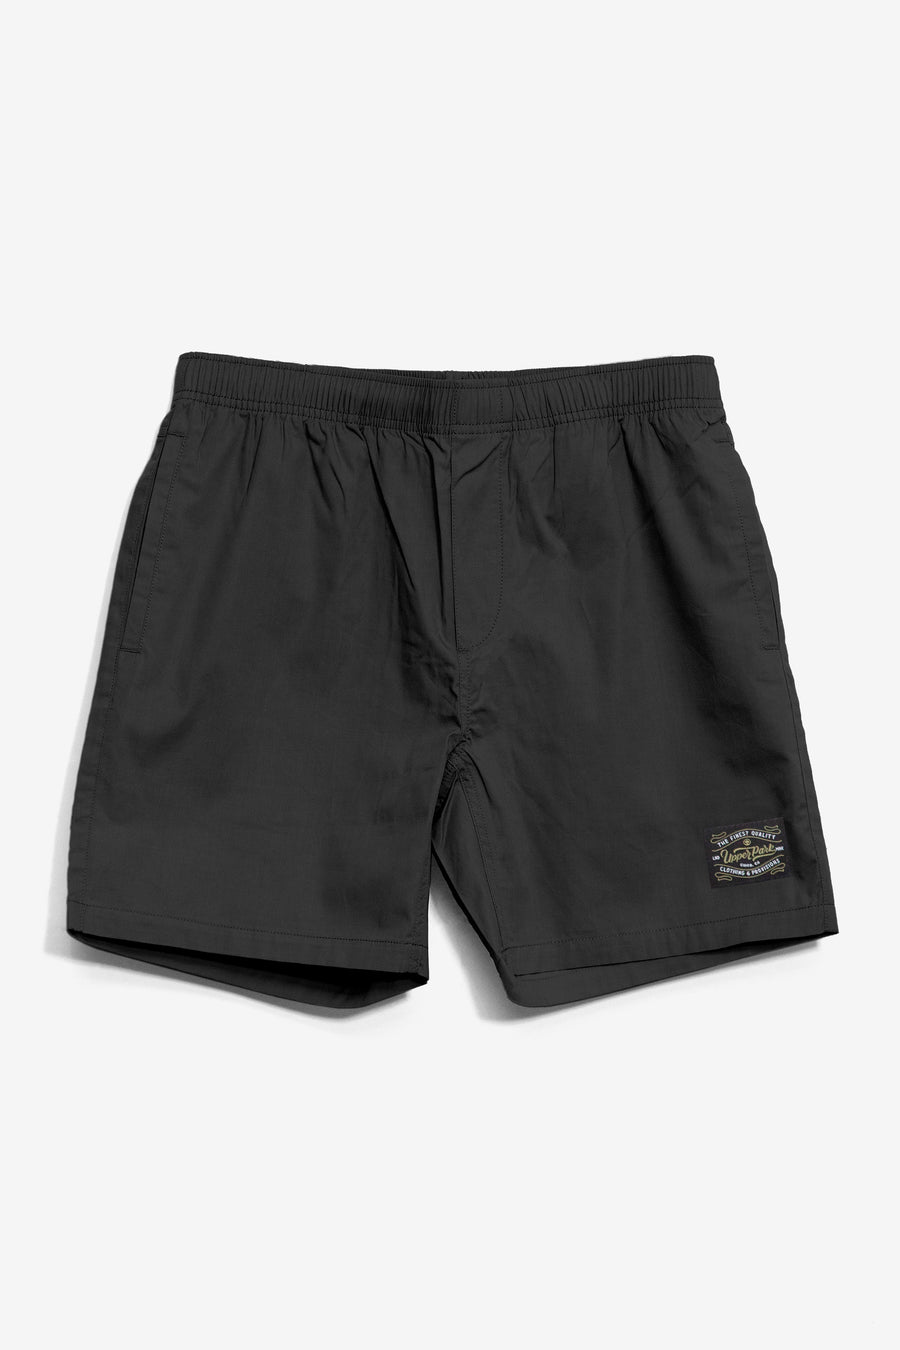 Pro Label 17" Beach Shorts